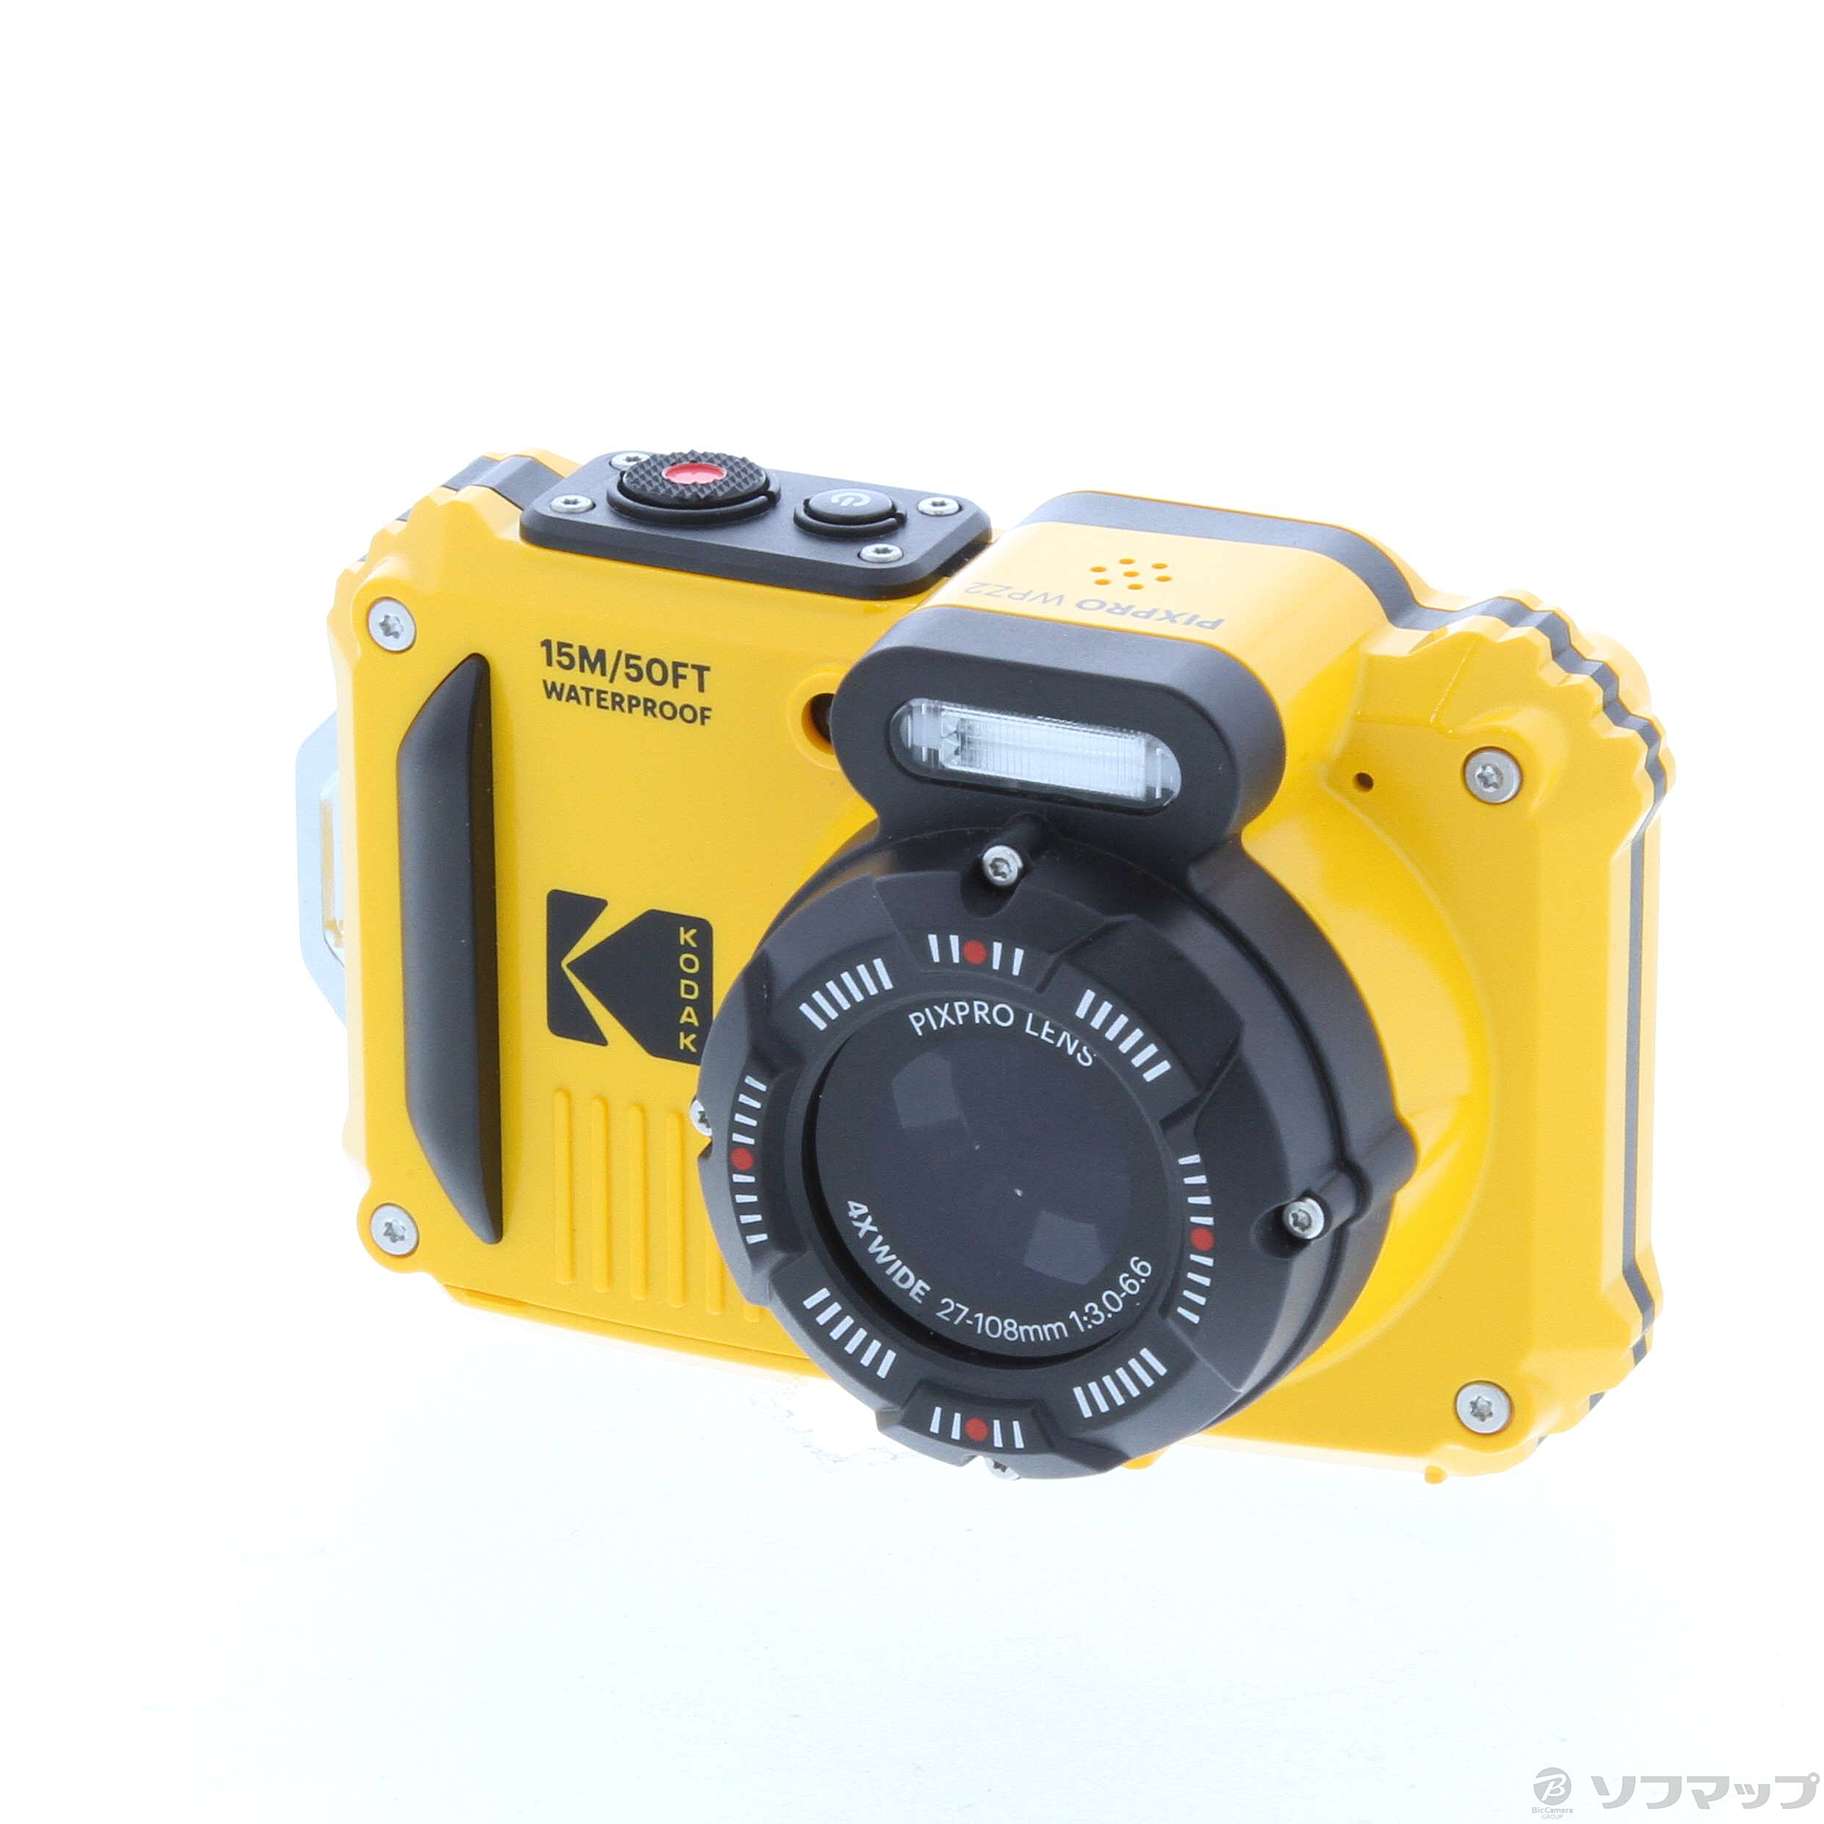  KODAK コダック PIXPRO WPZ2 コンパクトデジタルカメラ